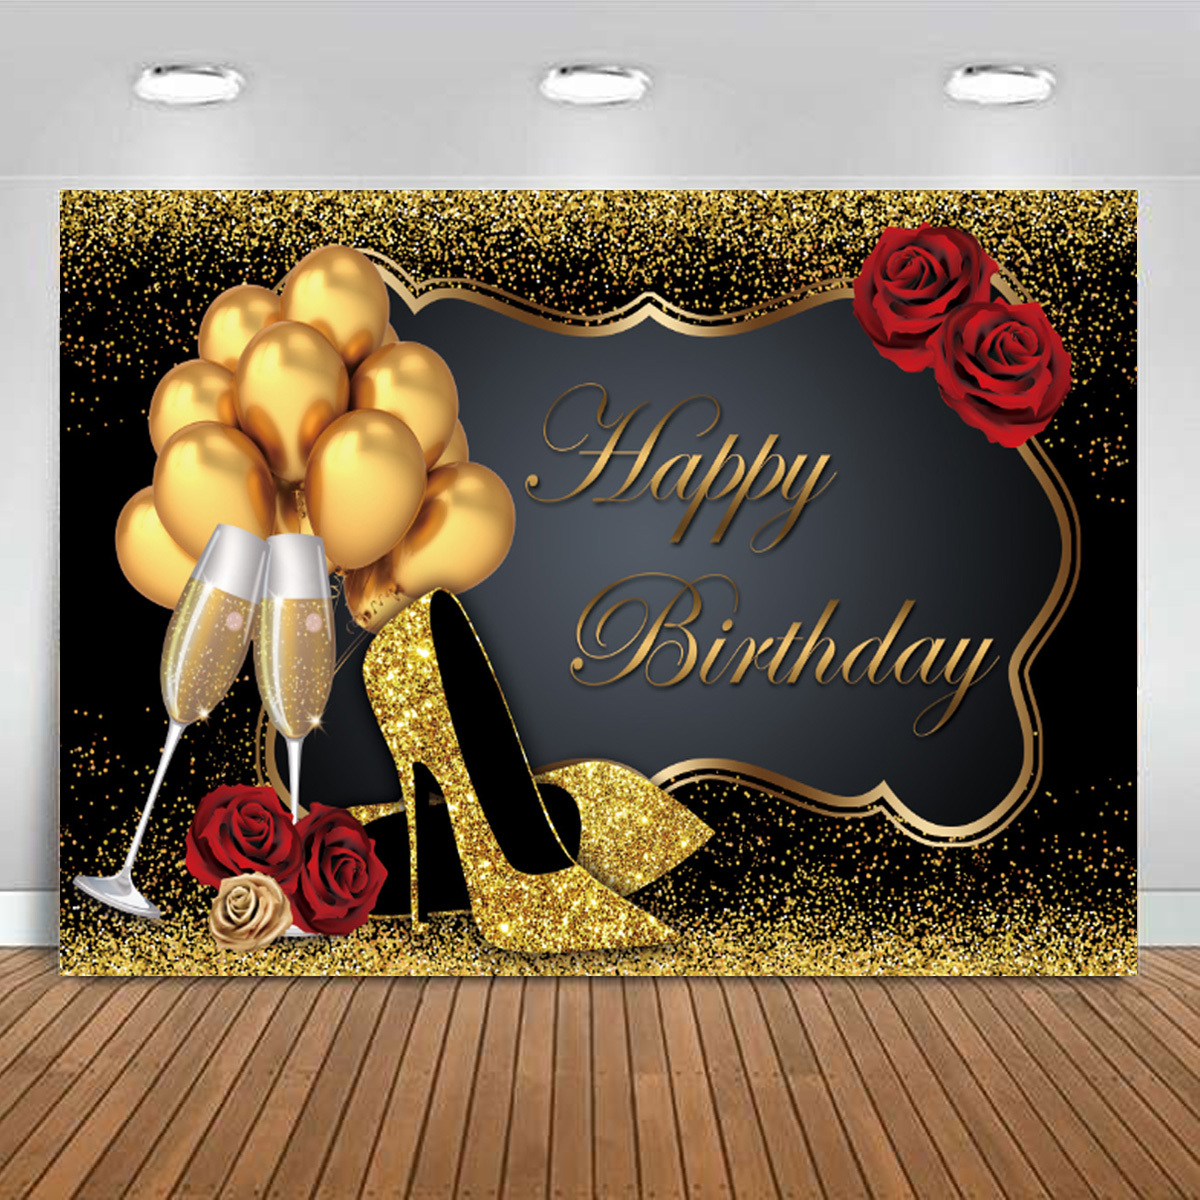 5x3FT 7x5FT 9x6FT High Heel Glass Golden Balloon Birthday Theme Photography Backdrop Background Studio P